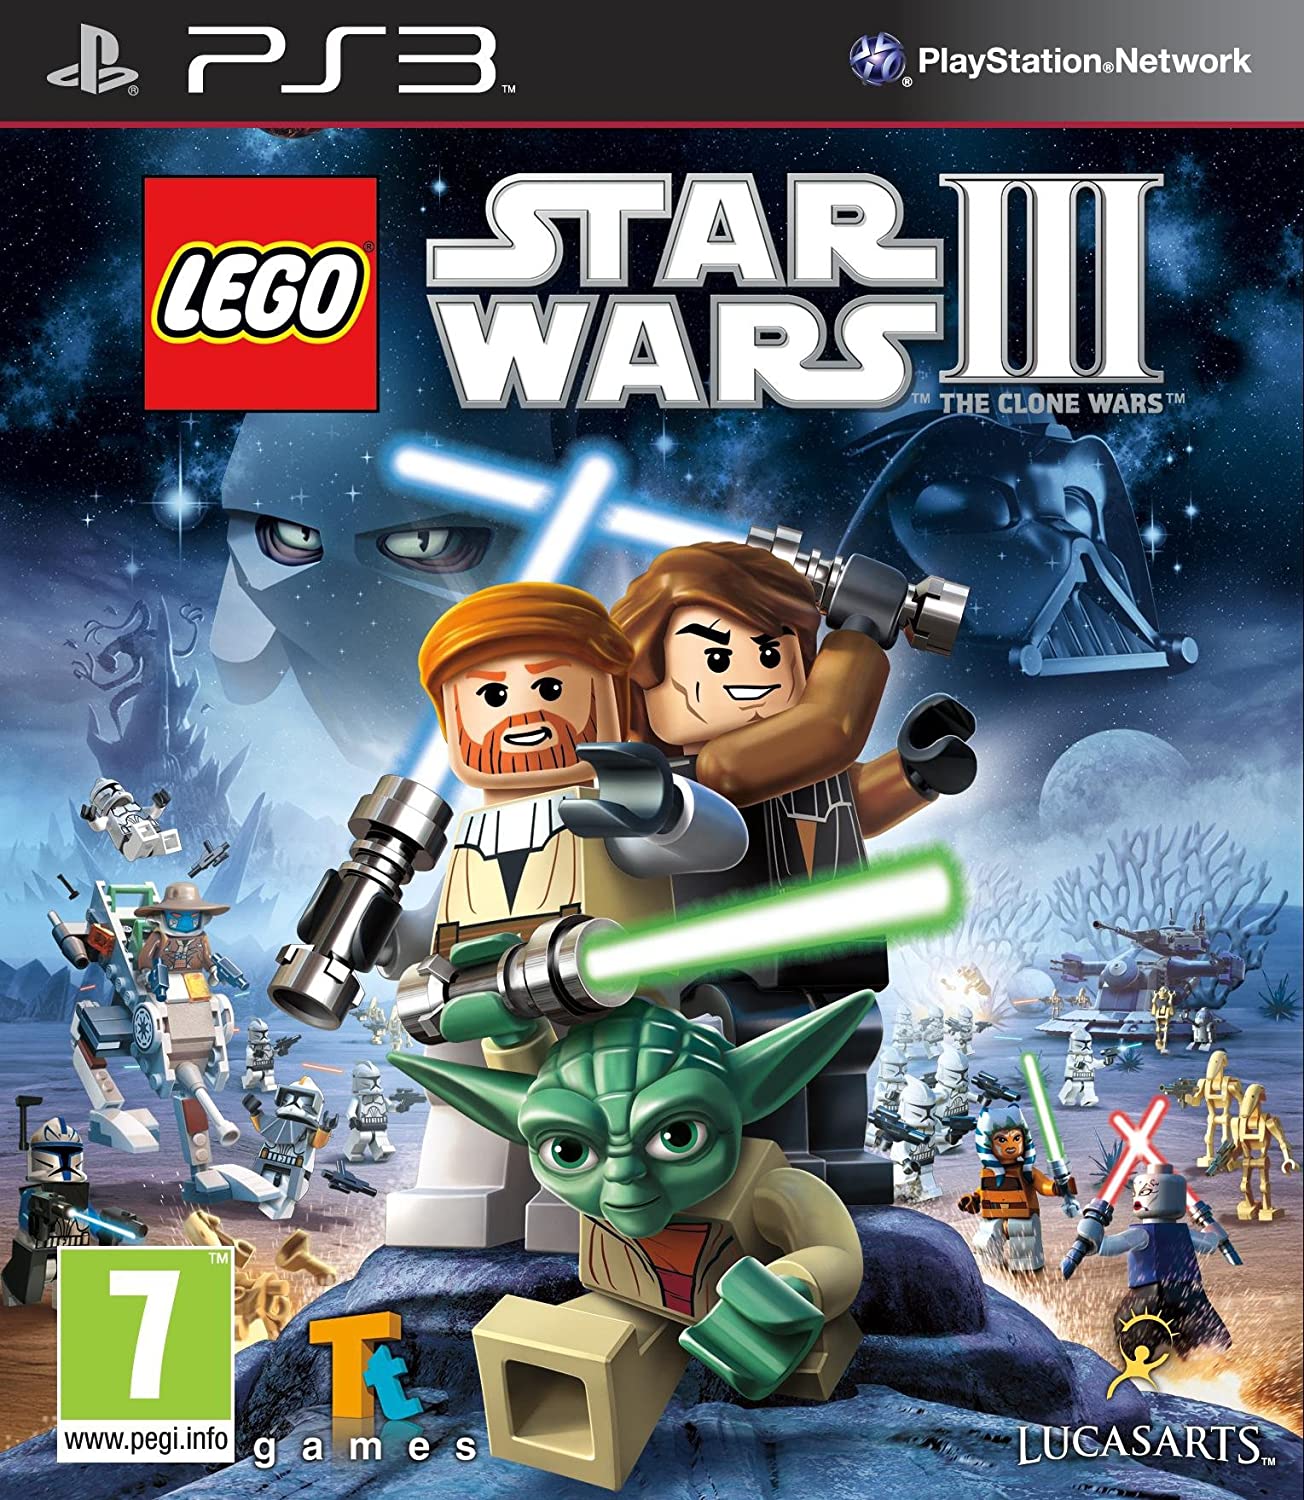 Lego Star Wars III the clone wars (Ps3)